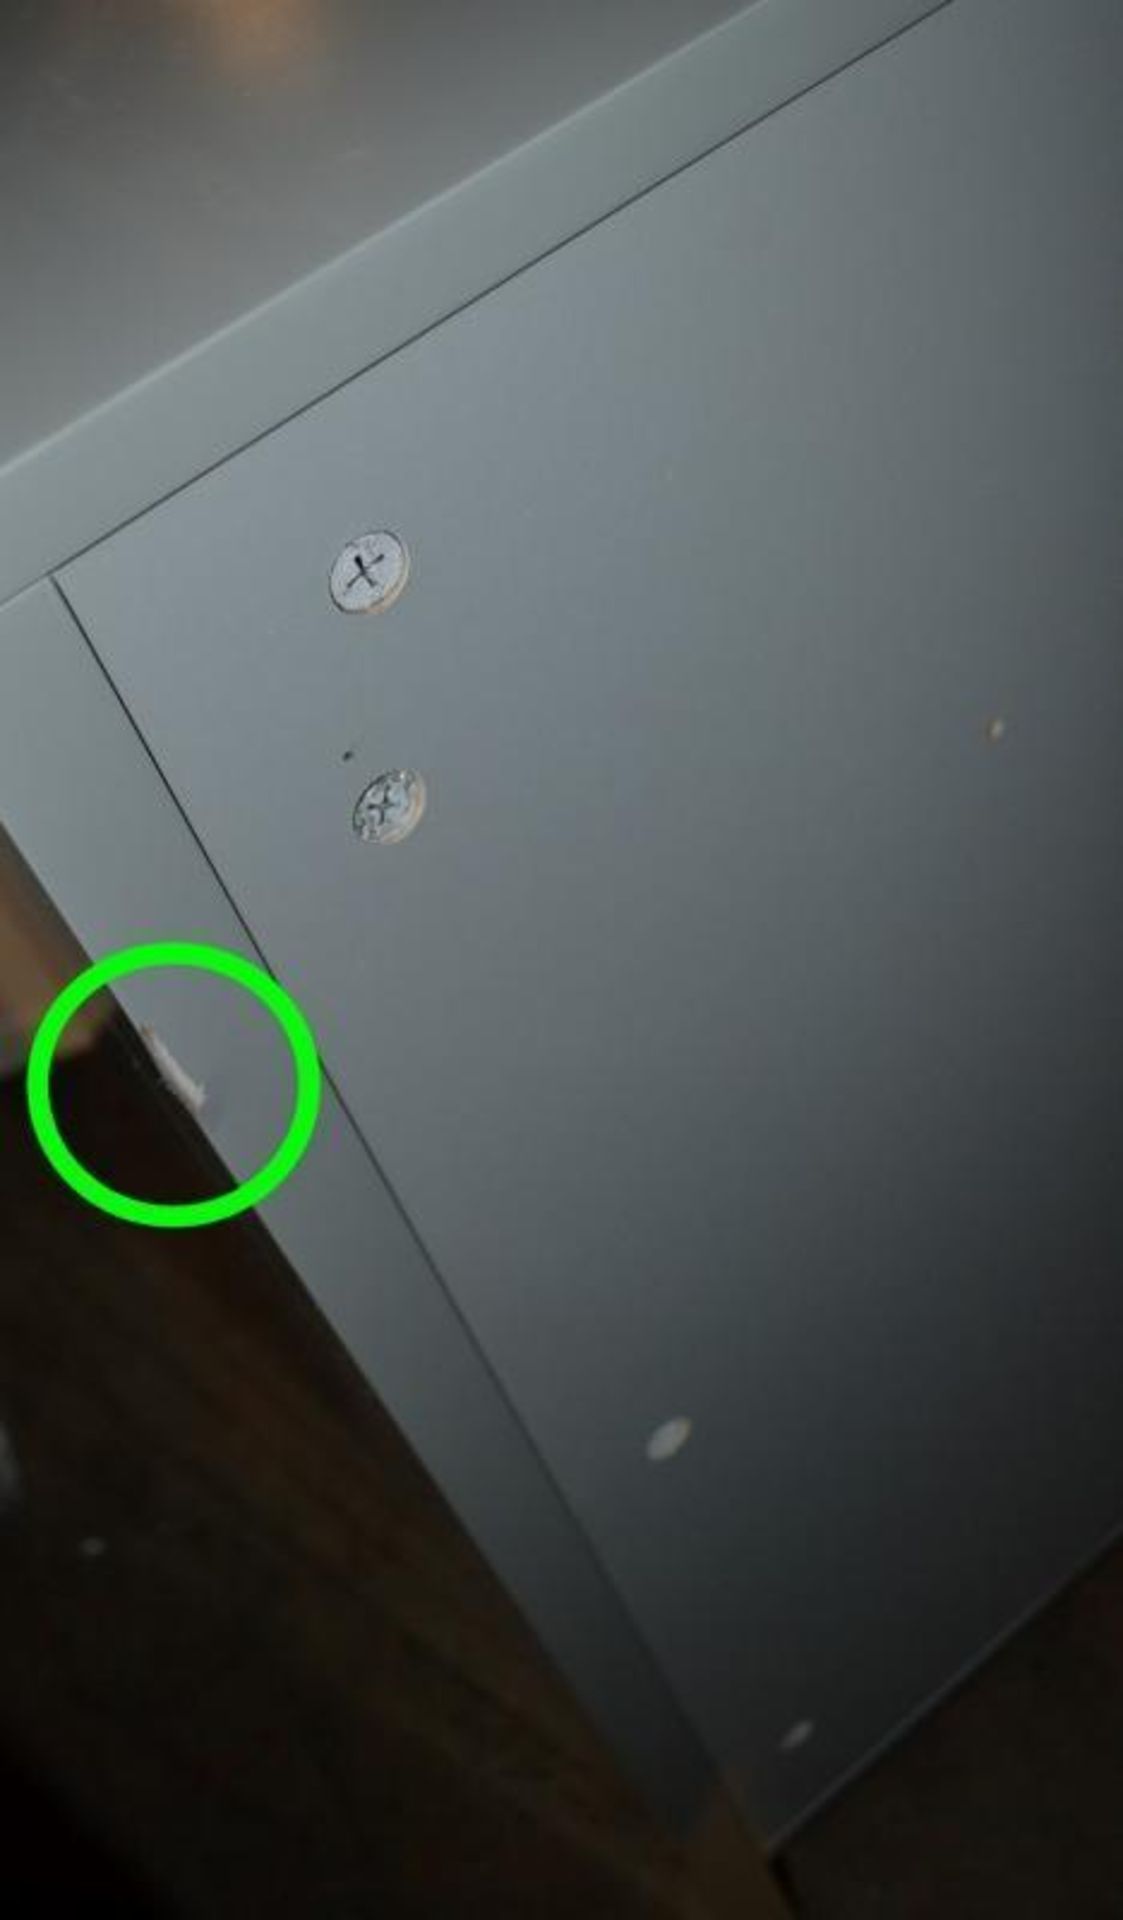 1 x Winchester 1-Door, 1-Drawer Bathroom Storage Unit In Light Grey - Ex-Display Stock - Dimensions: - Image 4 of 5